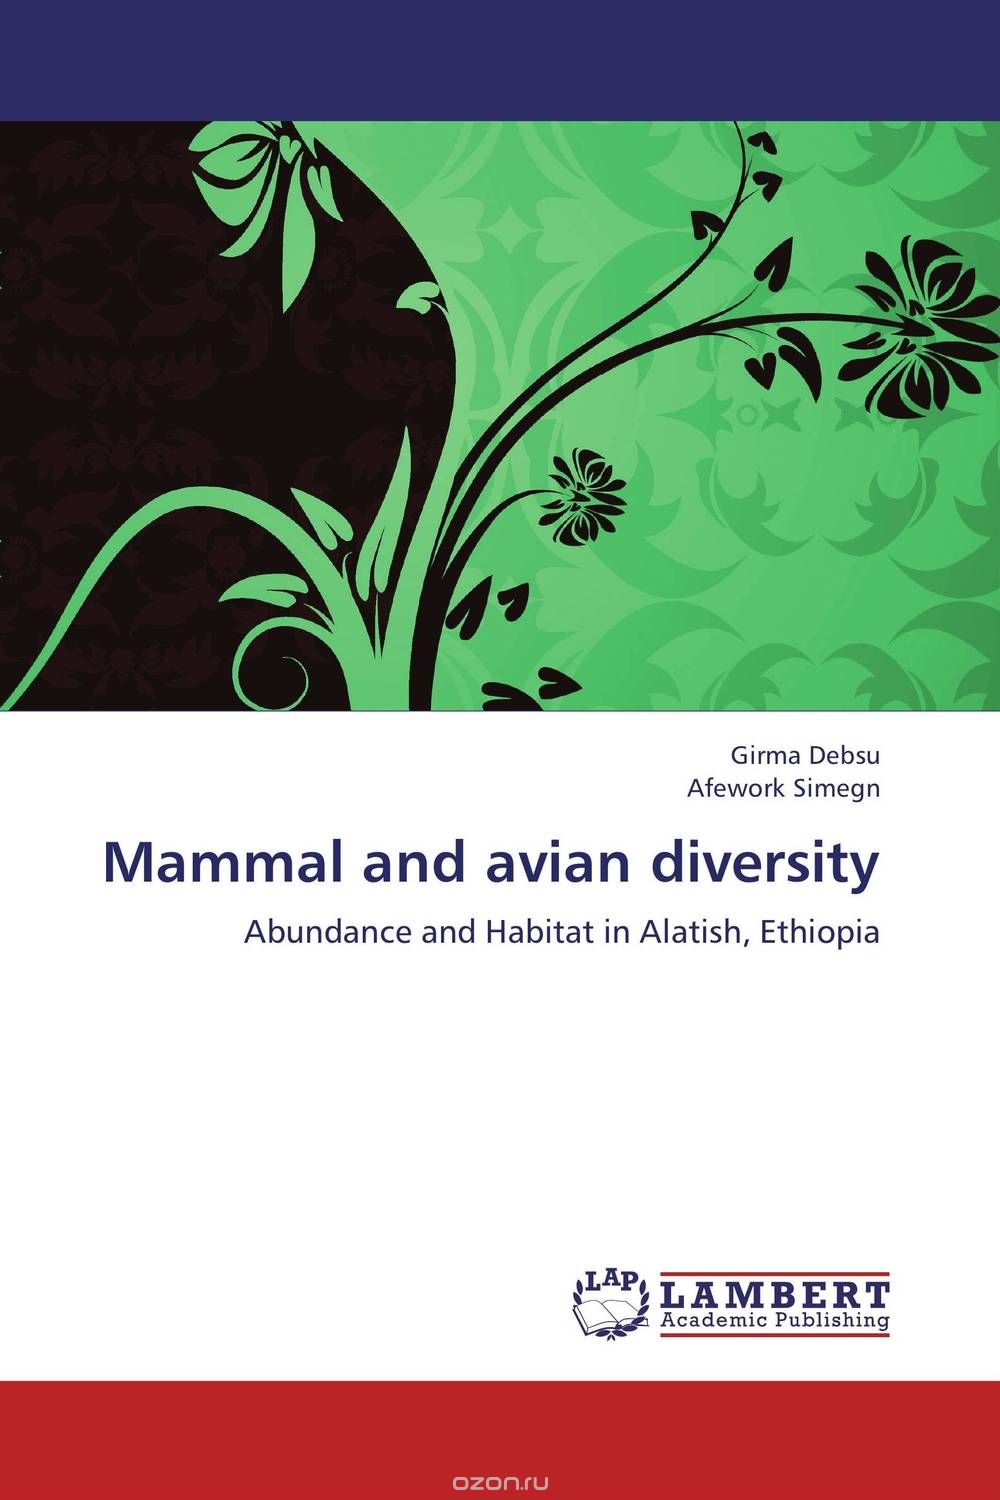 Скачать книгу "Mammal and avian diversity"